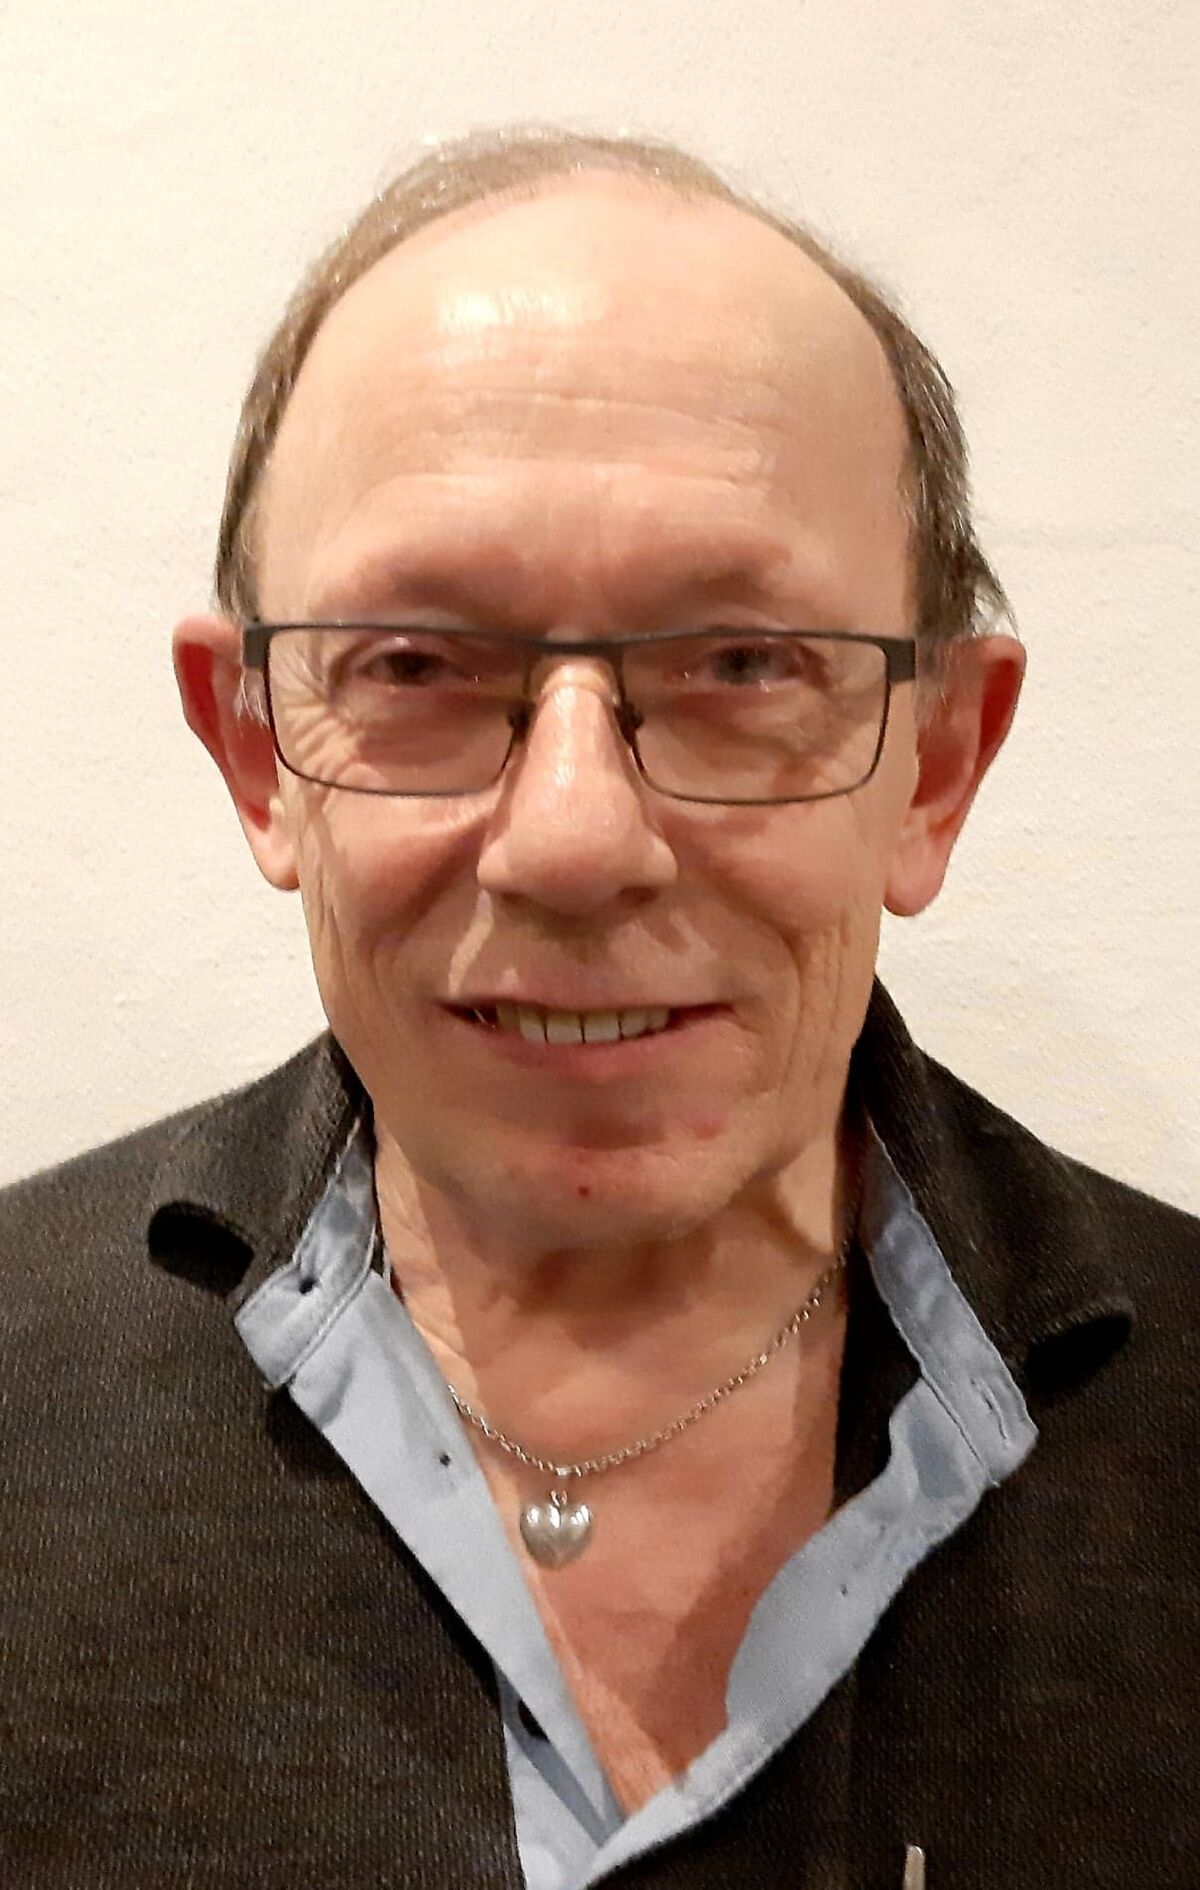 Peter Stegmann